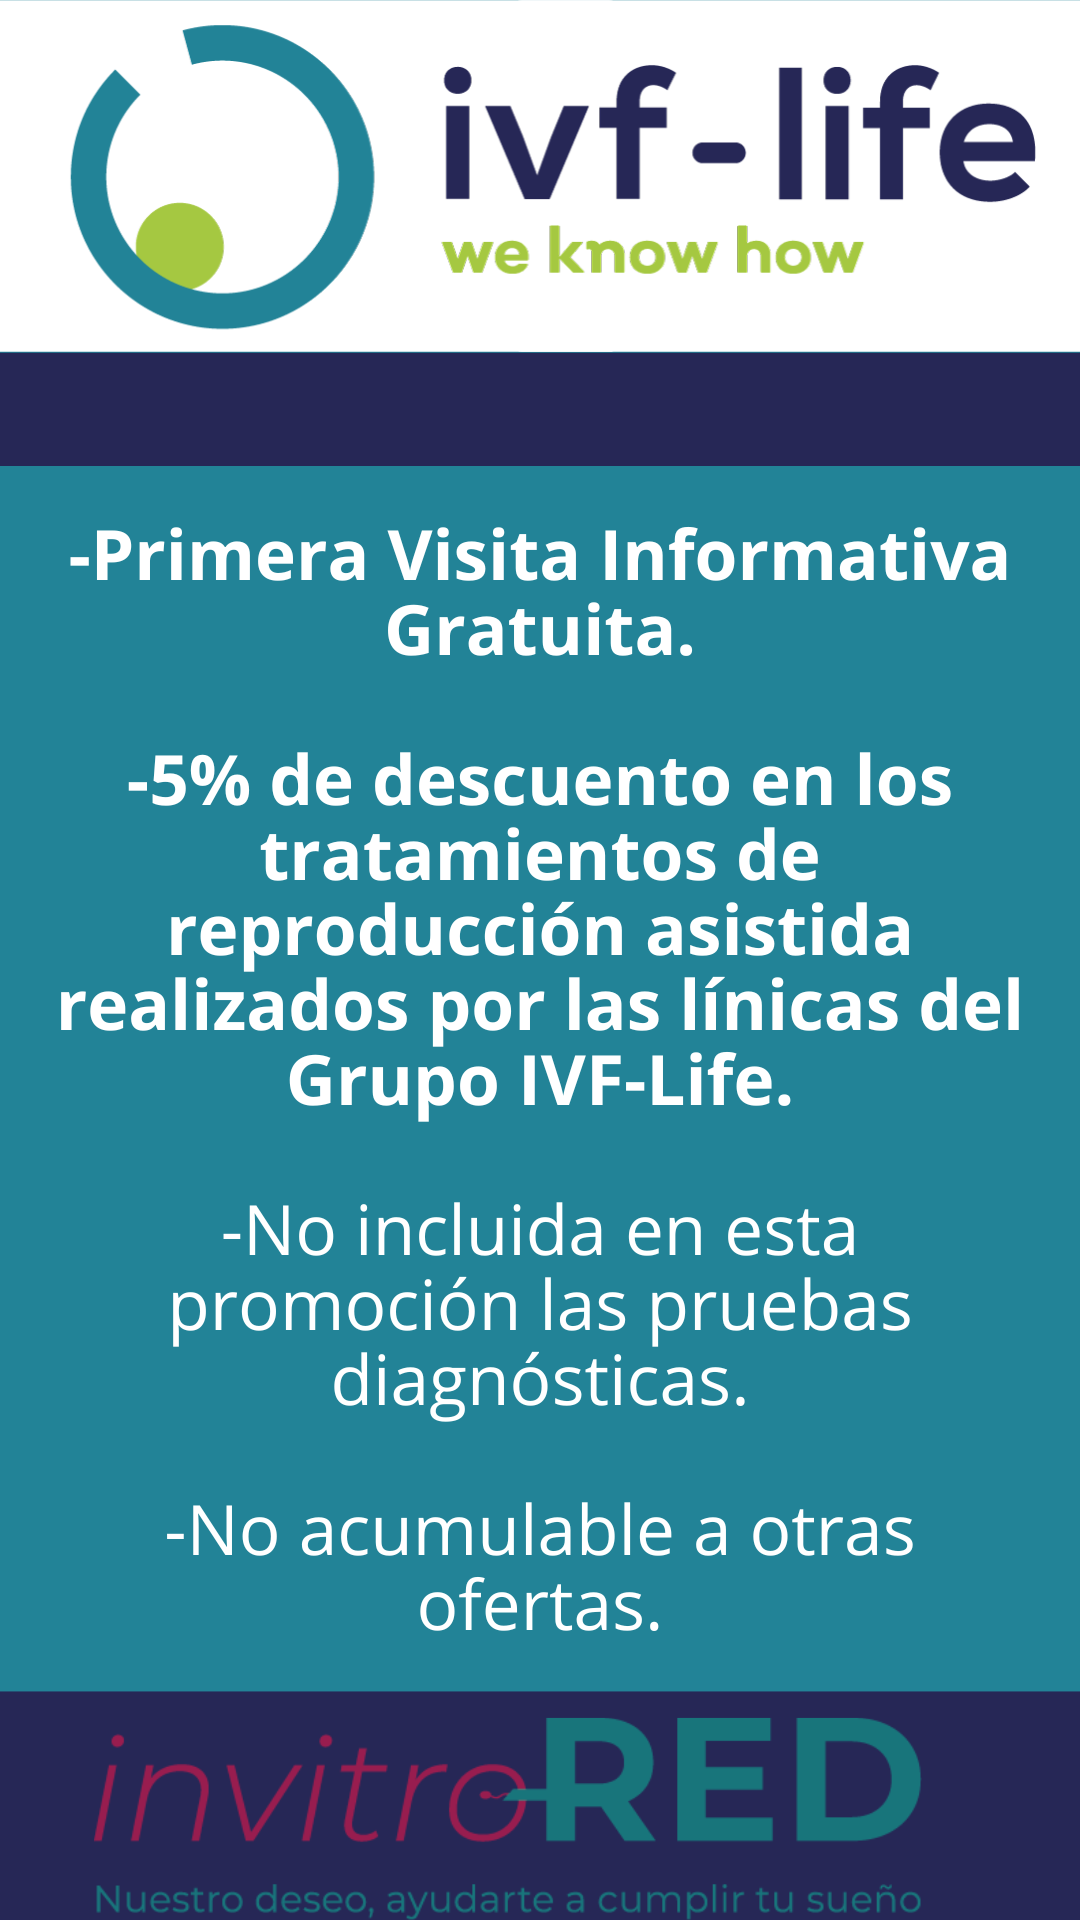 IVF-Life Madrid